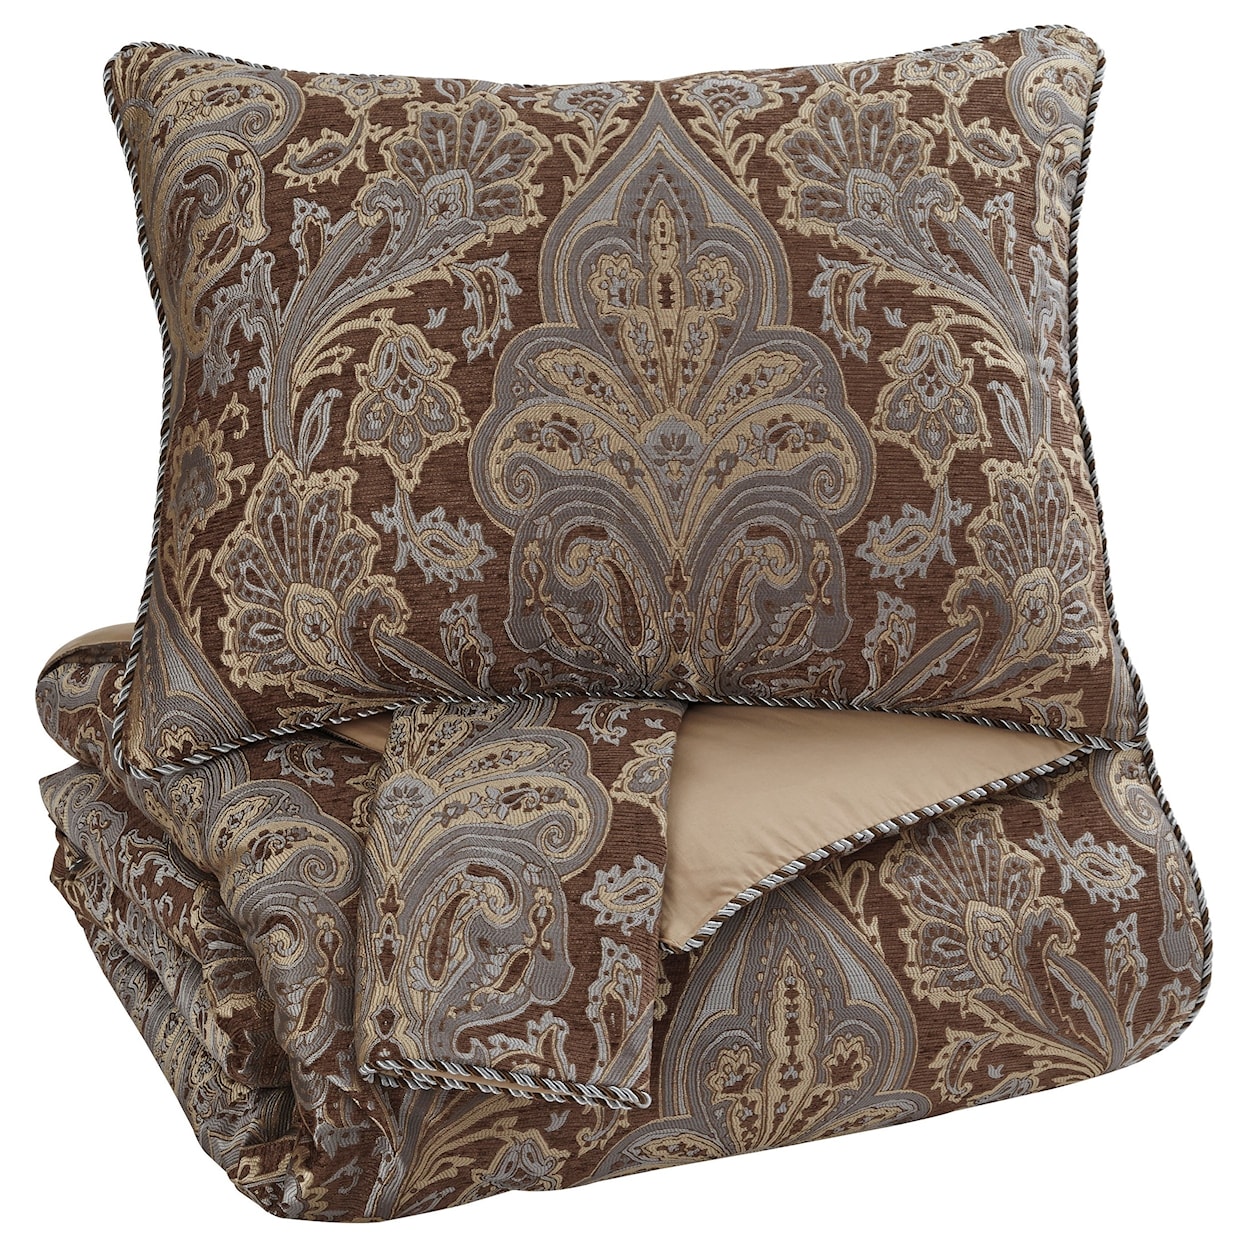 Ashley Furniture Signature Design Bedding Sets King Asali Chocolate/Blue Comforter Set